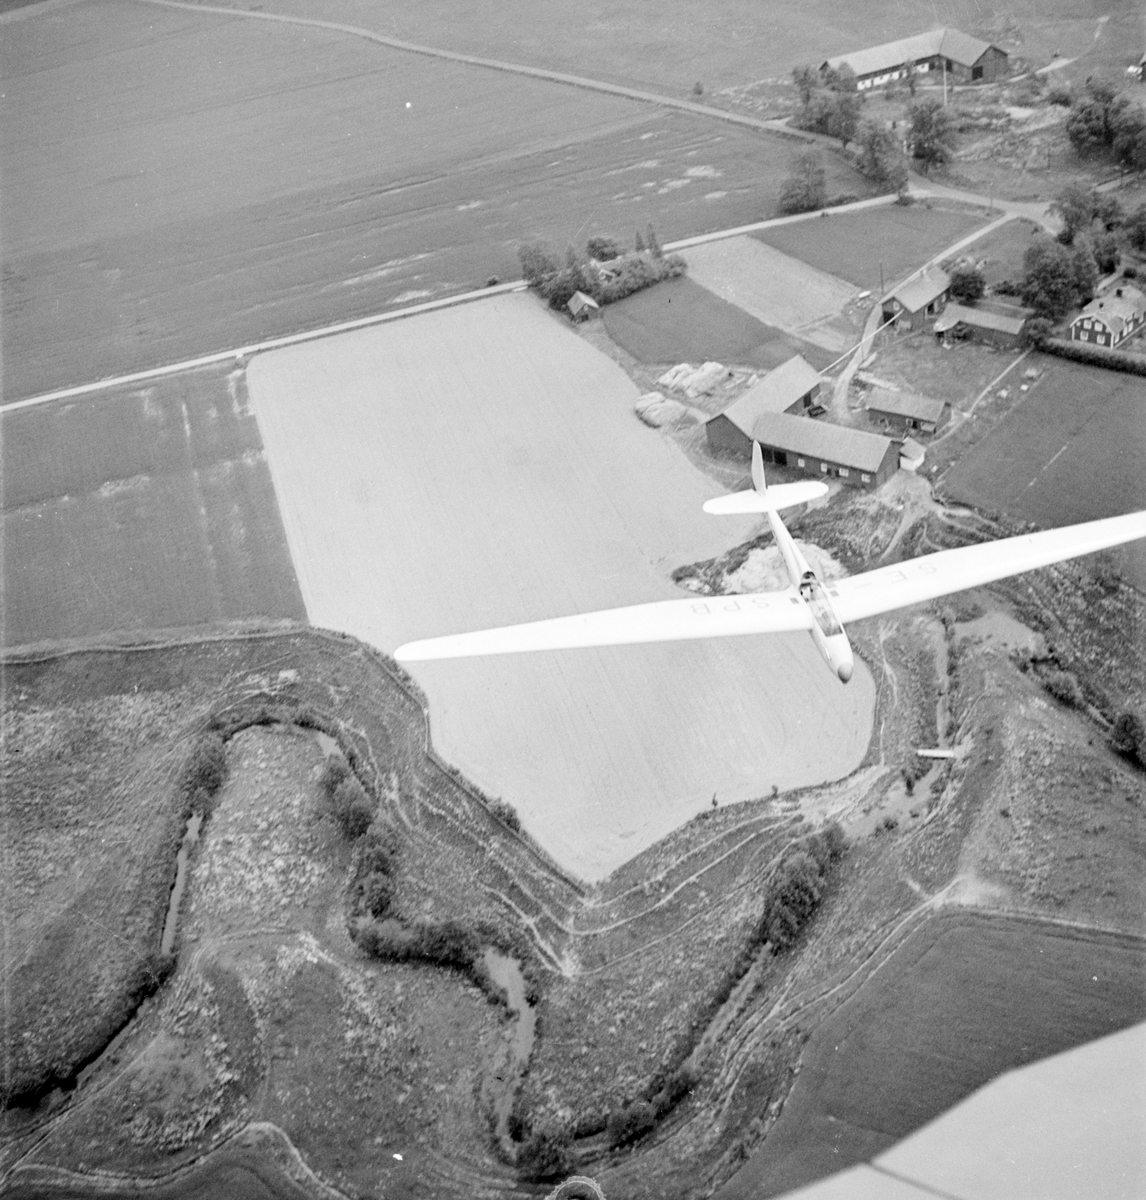 Segelflyg, Sundbro, Uppsala 1953